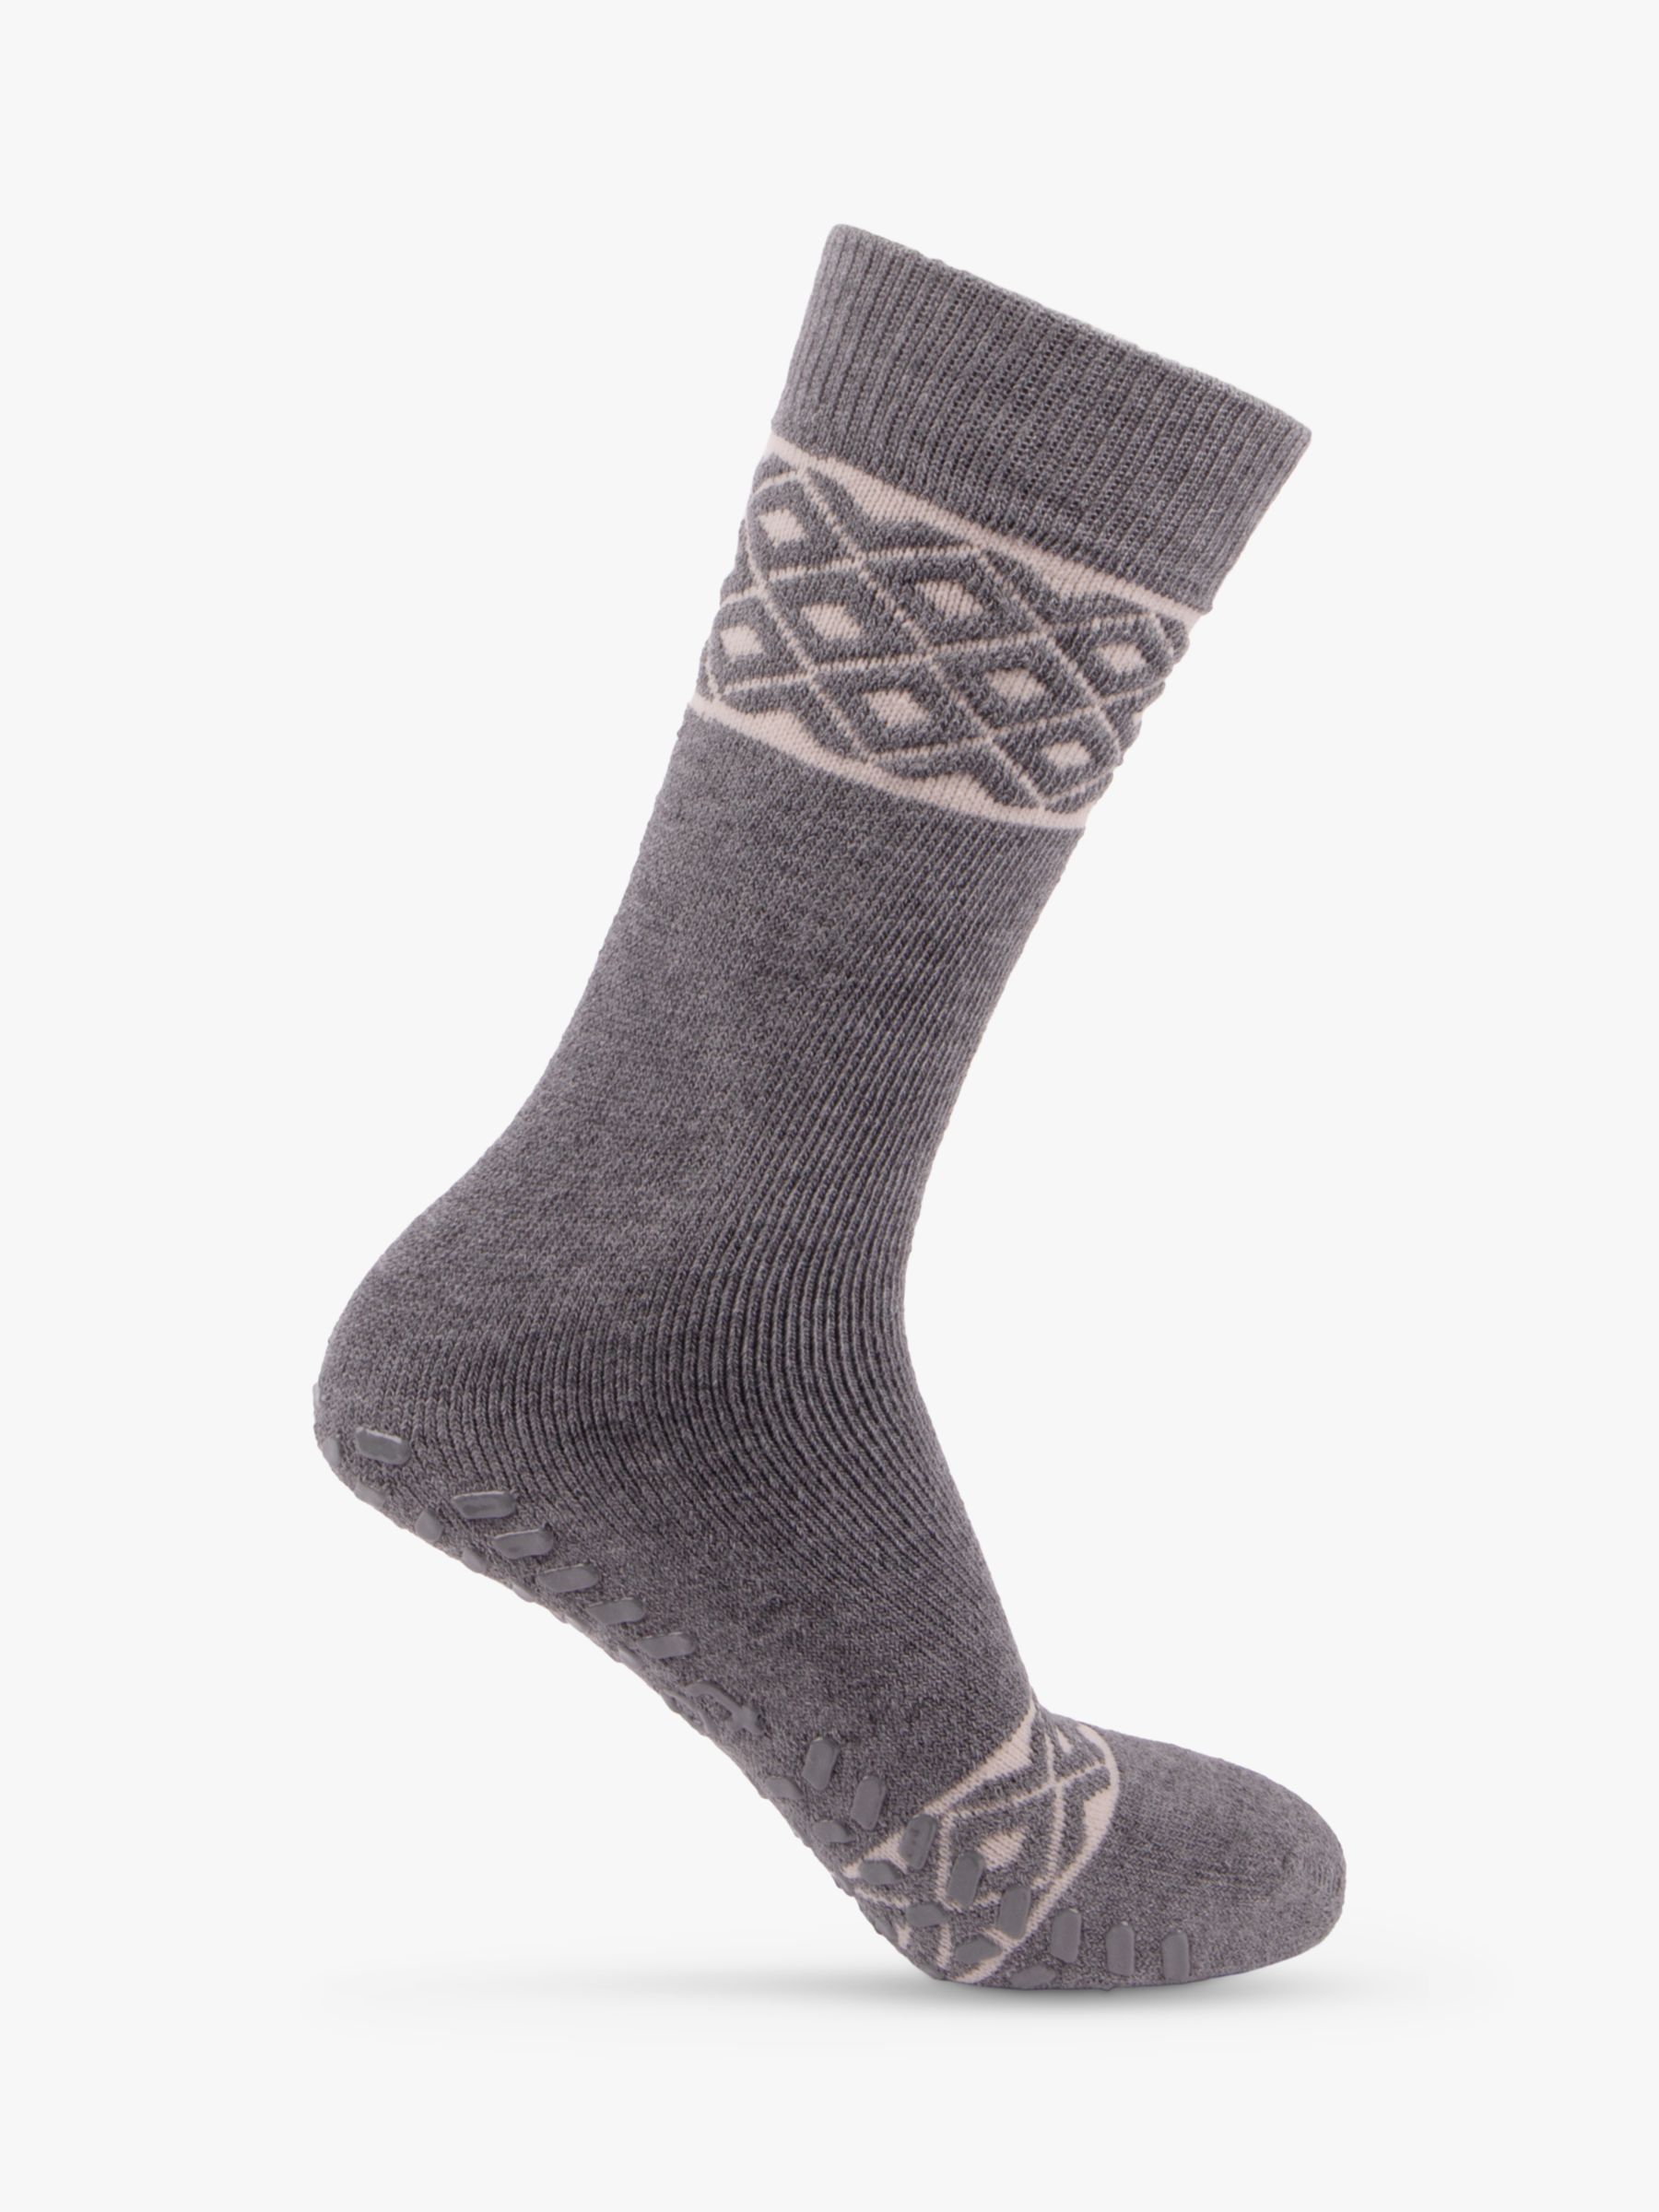 totes Supersoft Slipper Socks, Pack of 2, Black/Grey at John Lewis